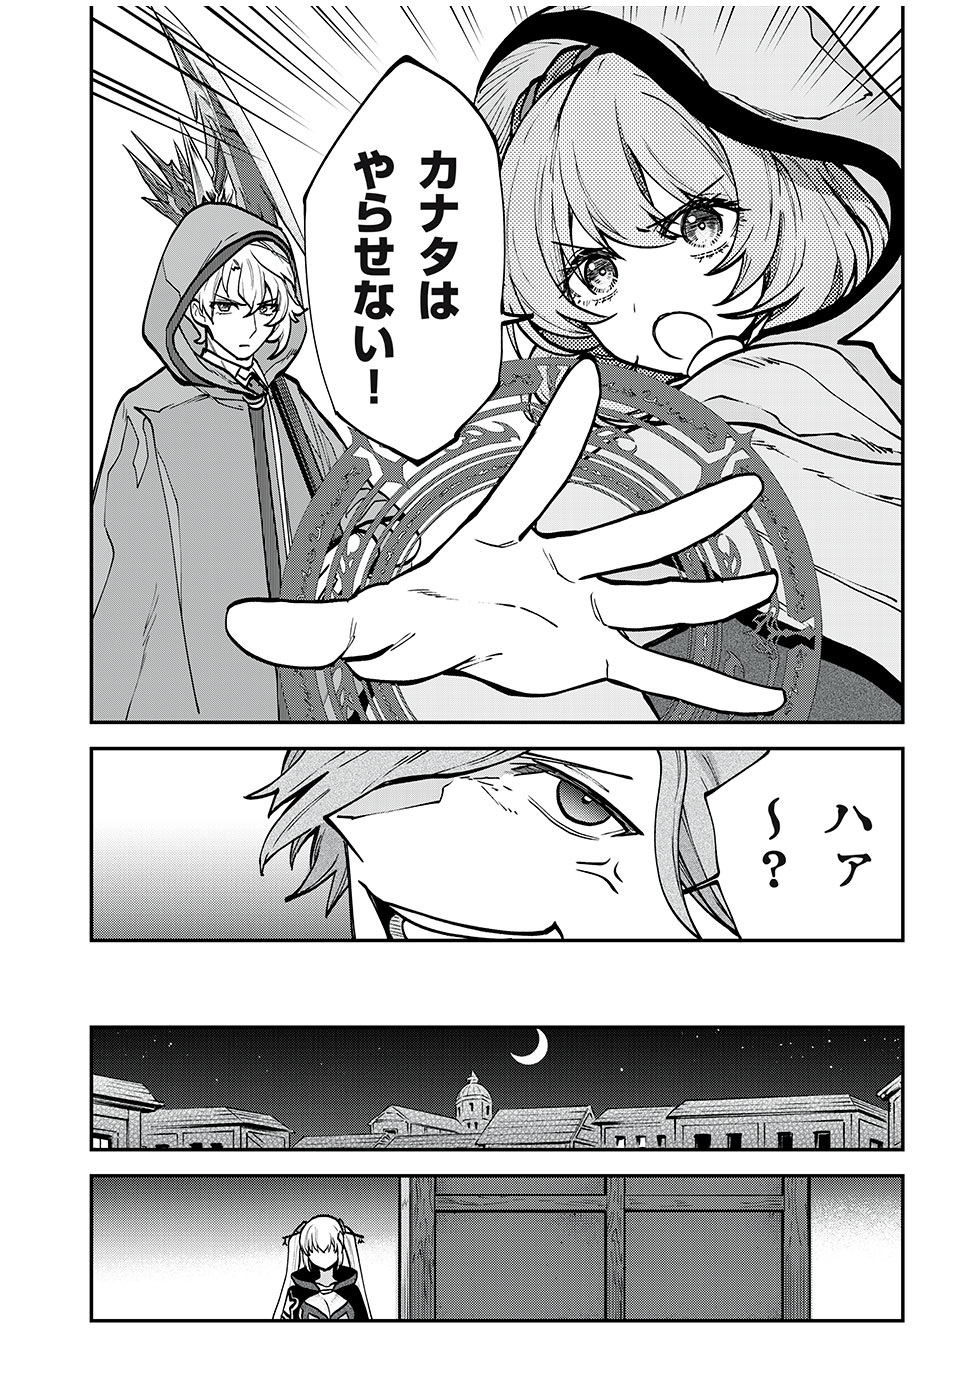 Tales of Crestoria – Togabito no Saika - Chapter 29 - Page 14